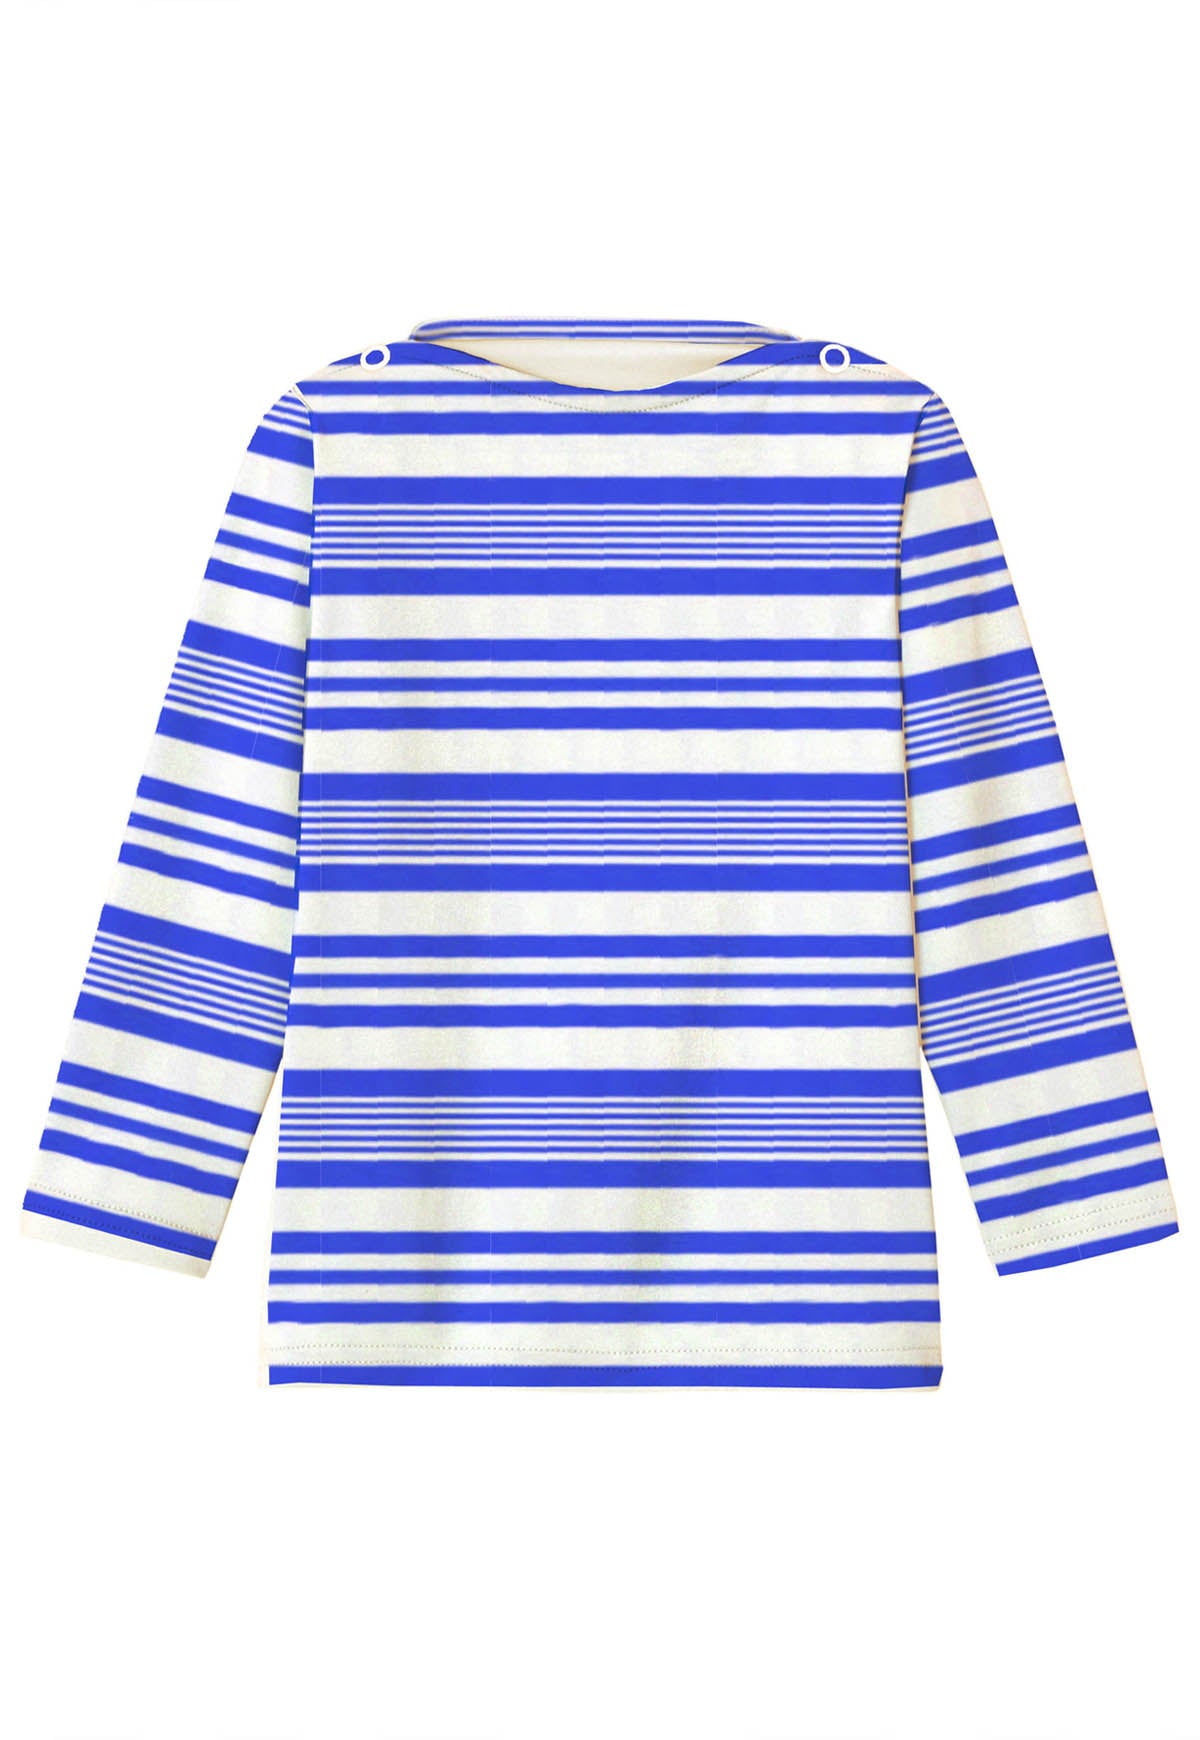 Boys' anti-UV t-shirt, blue striped | MALO T-SHIRT